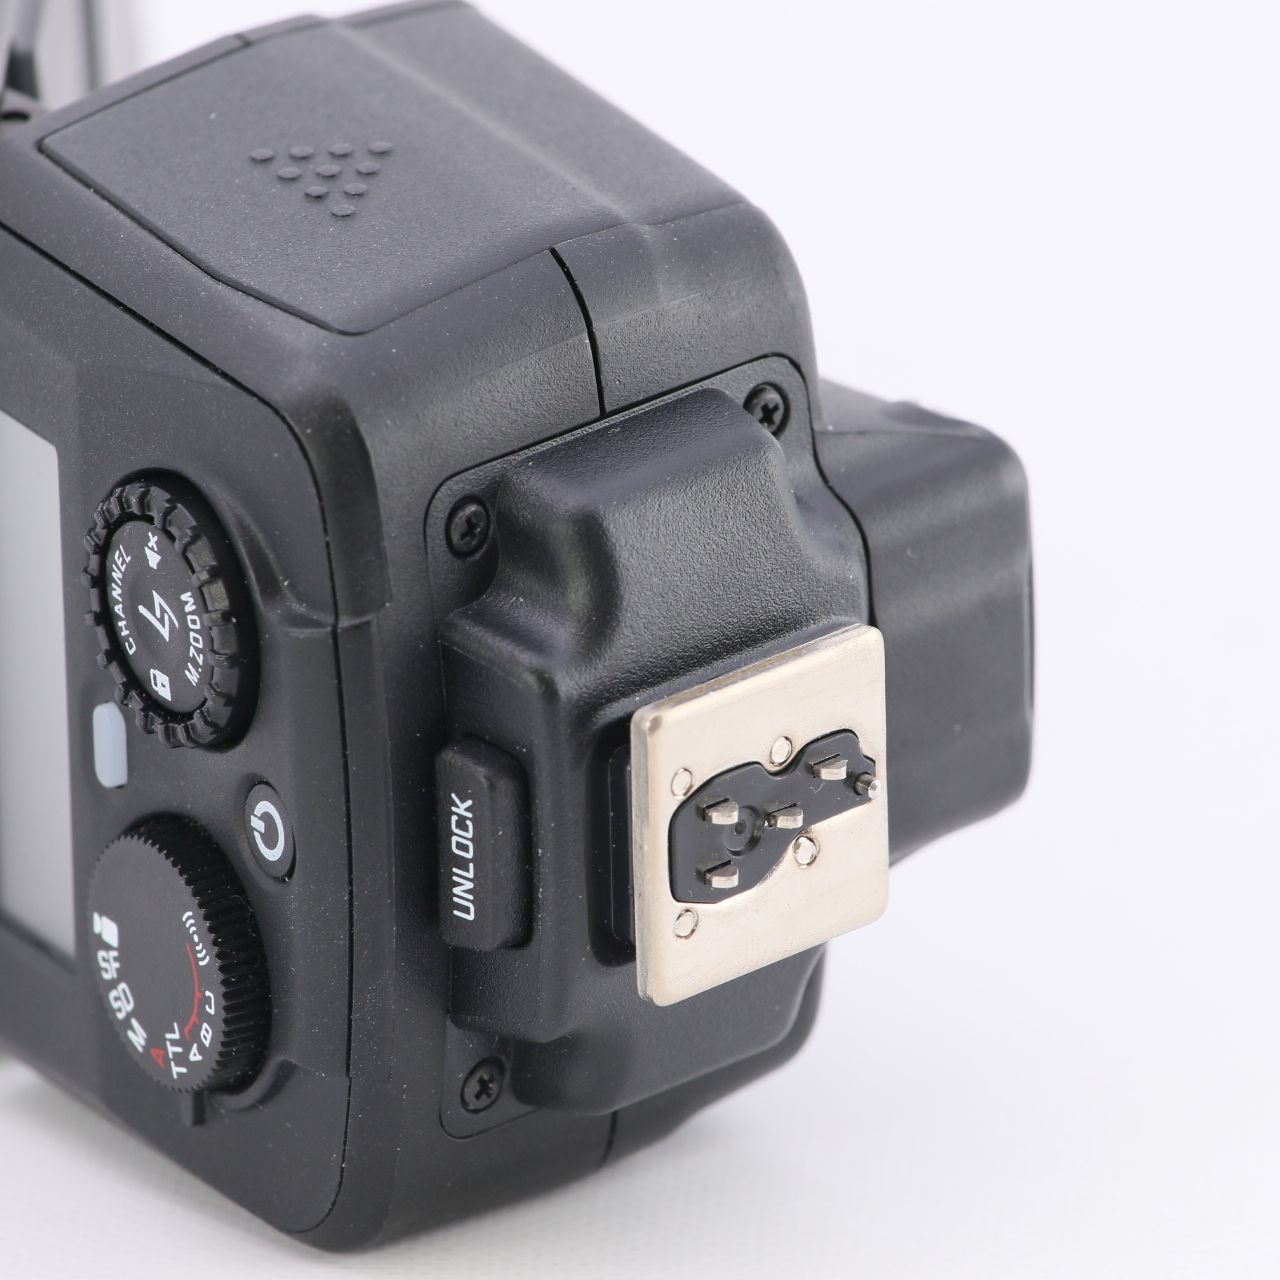 Leica ライカ SF60 フラッシュ ブラック (14625) 元箱付き カメラ本舗｜Camera honpo メルカリ